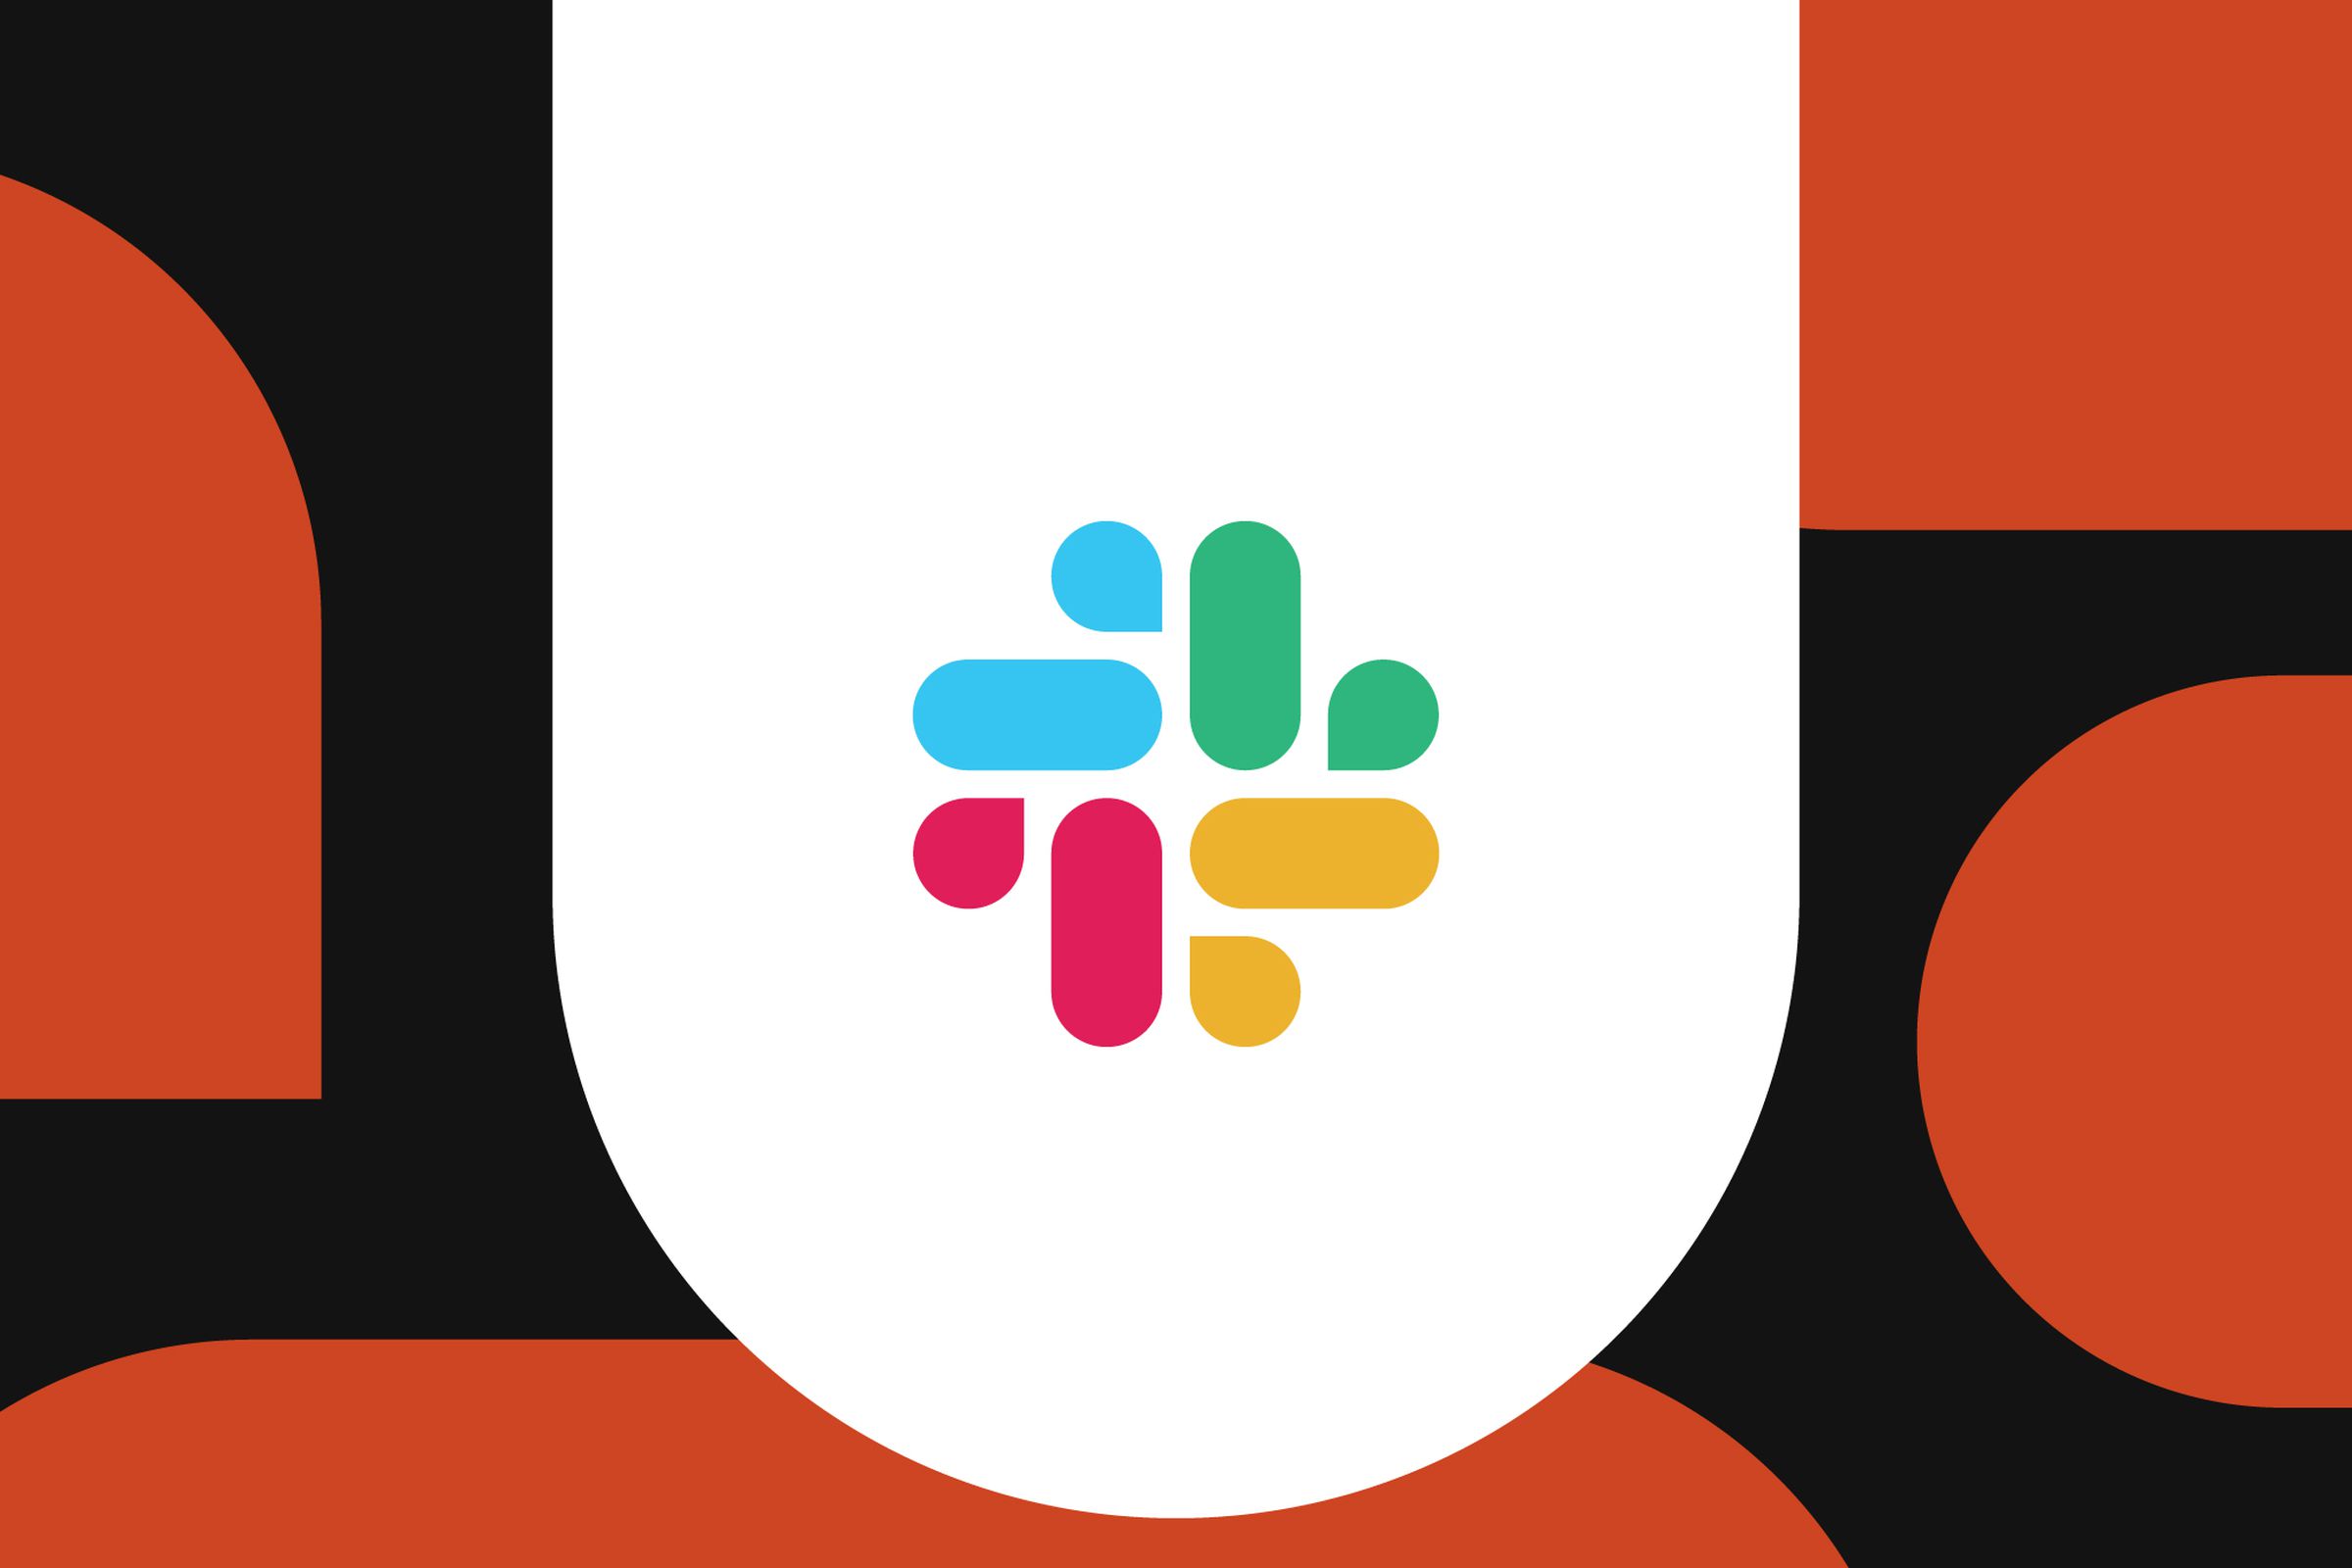 An illustration of the Slack logo.